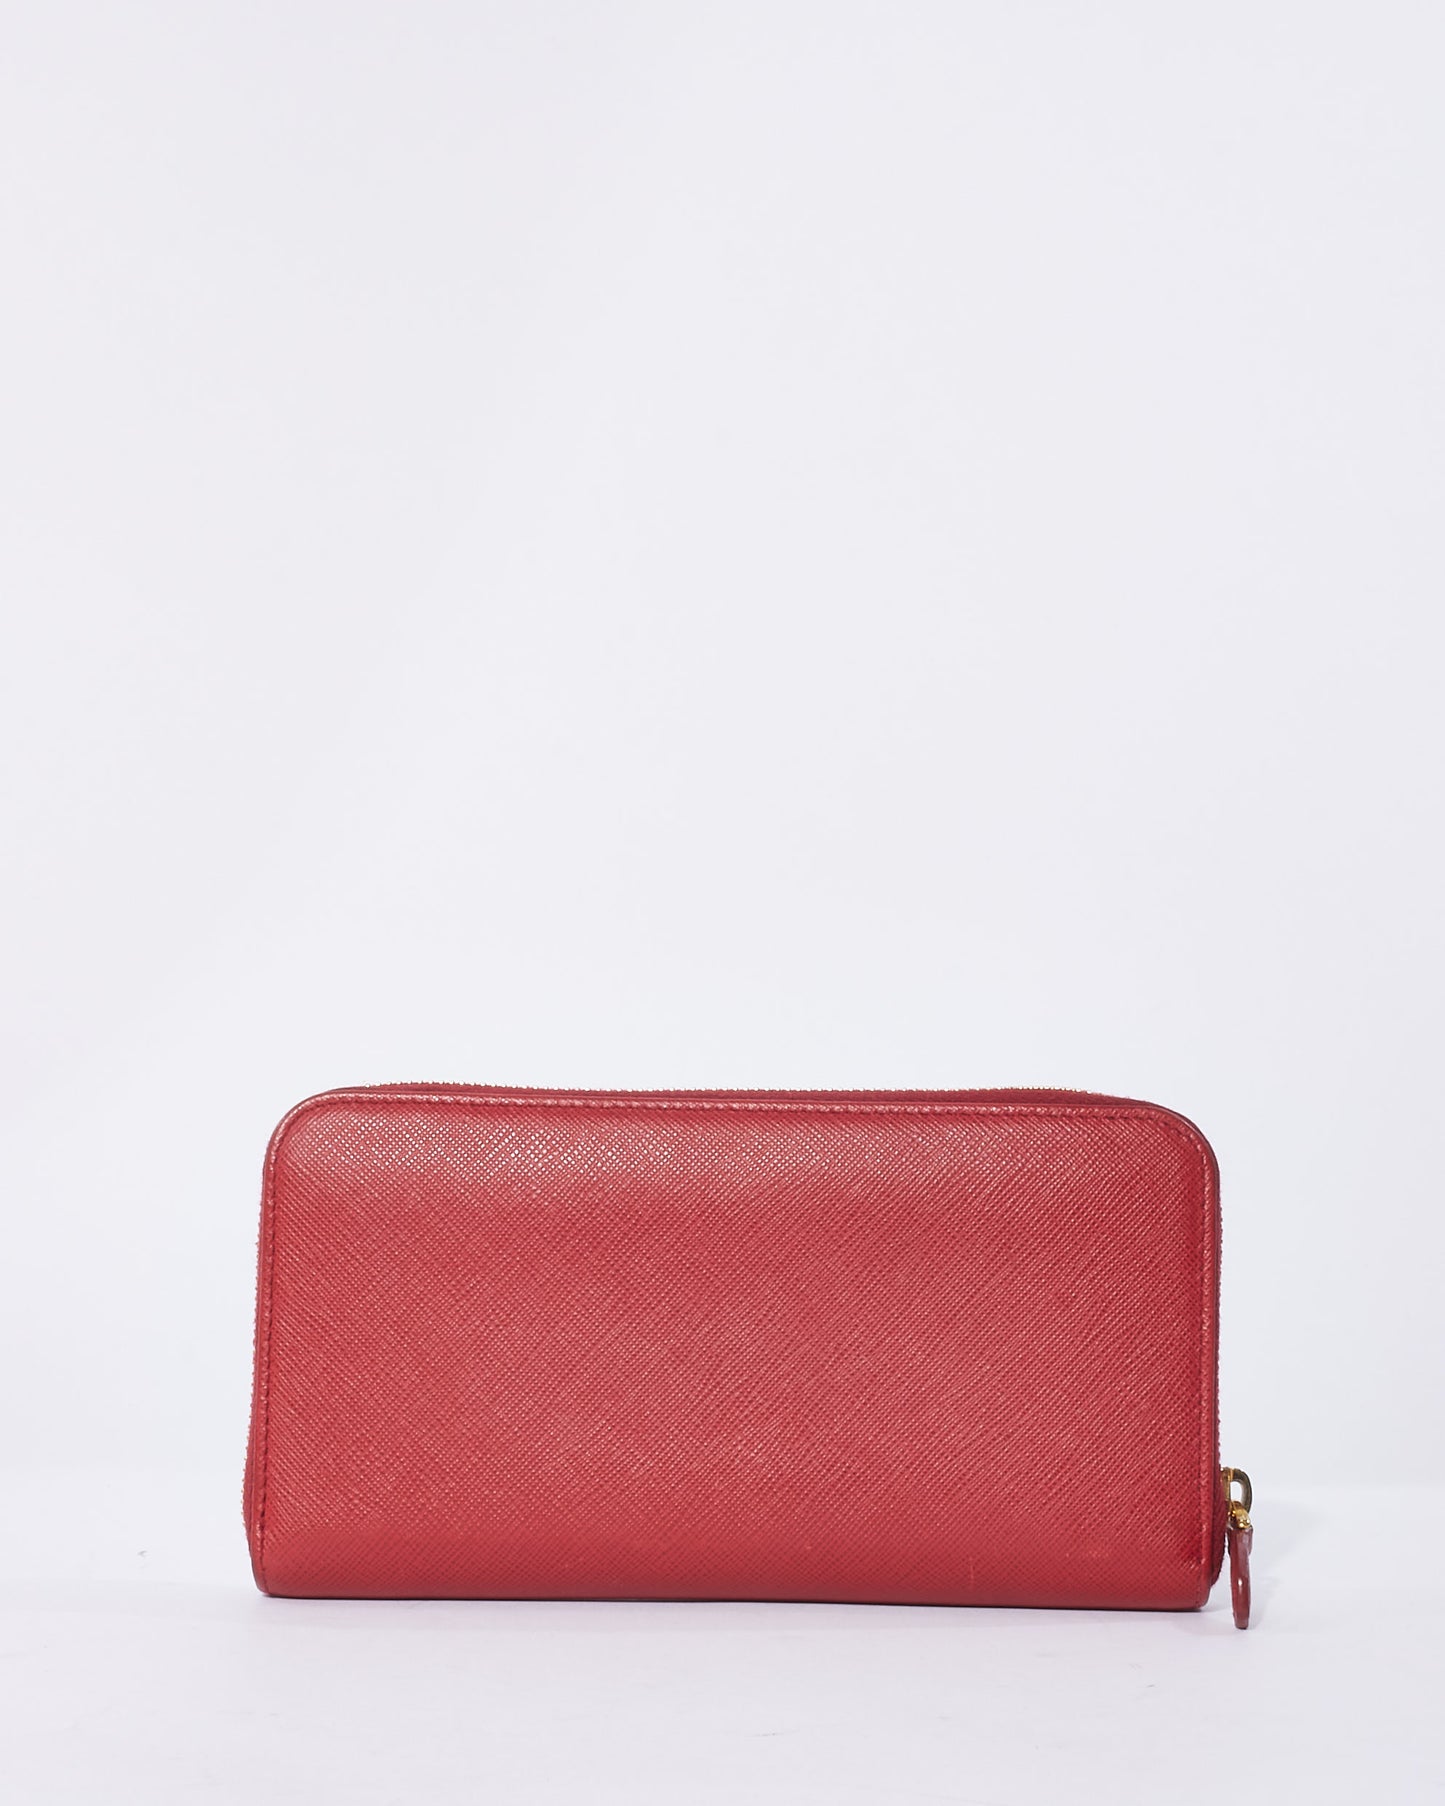 Prada Red Saffiano Leather Long Zip Wallet